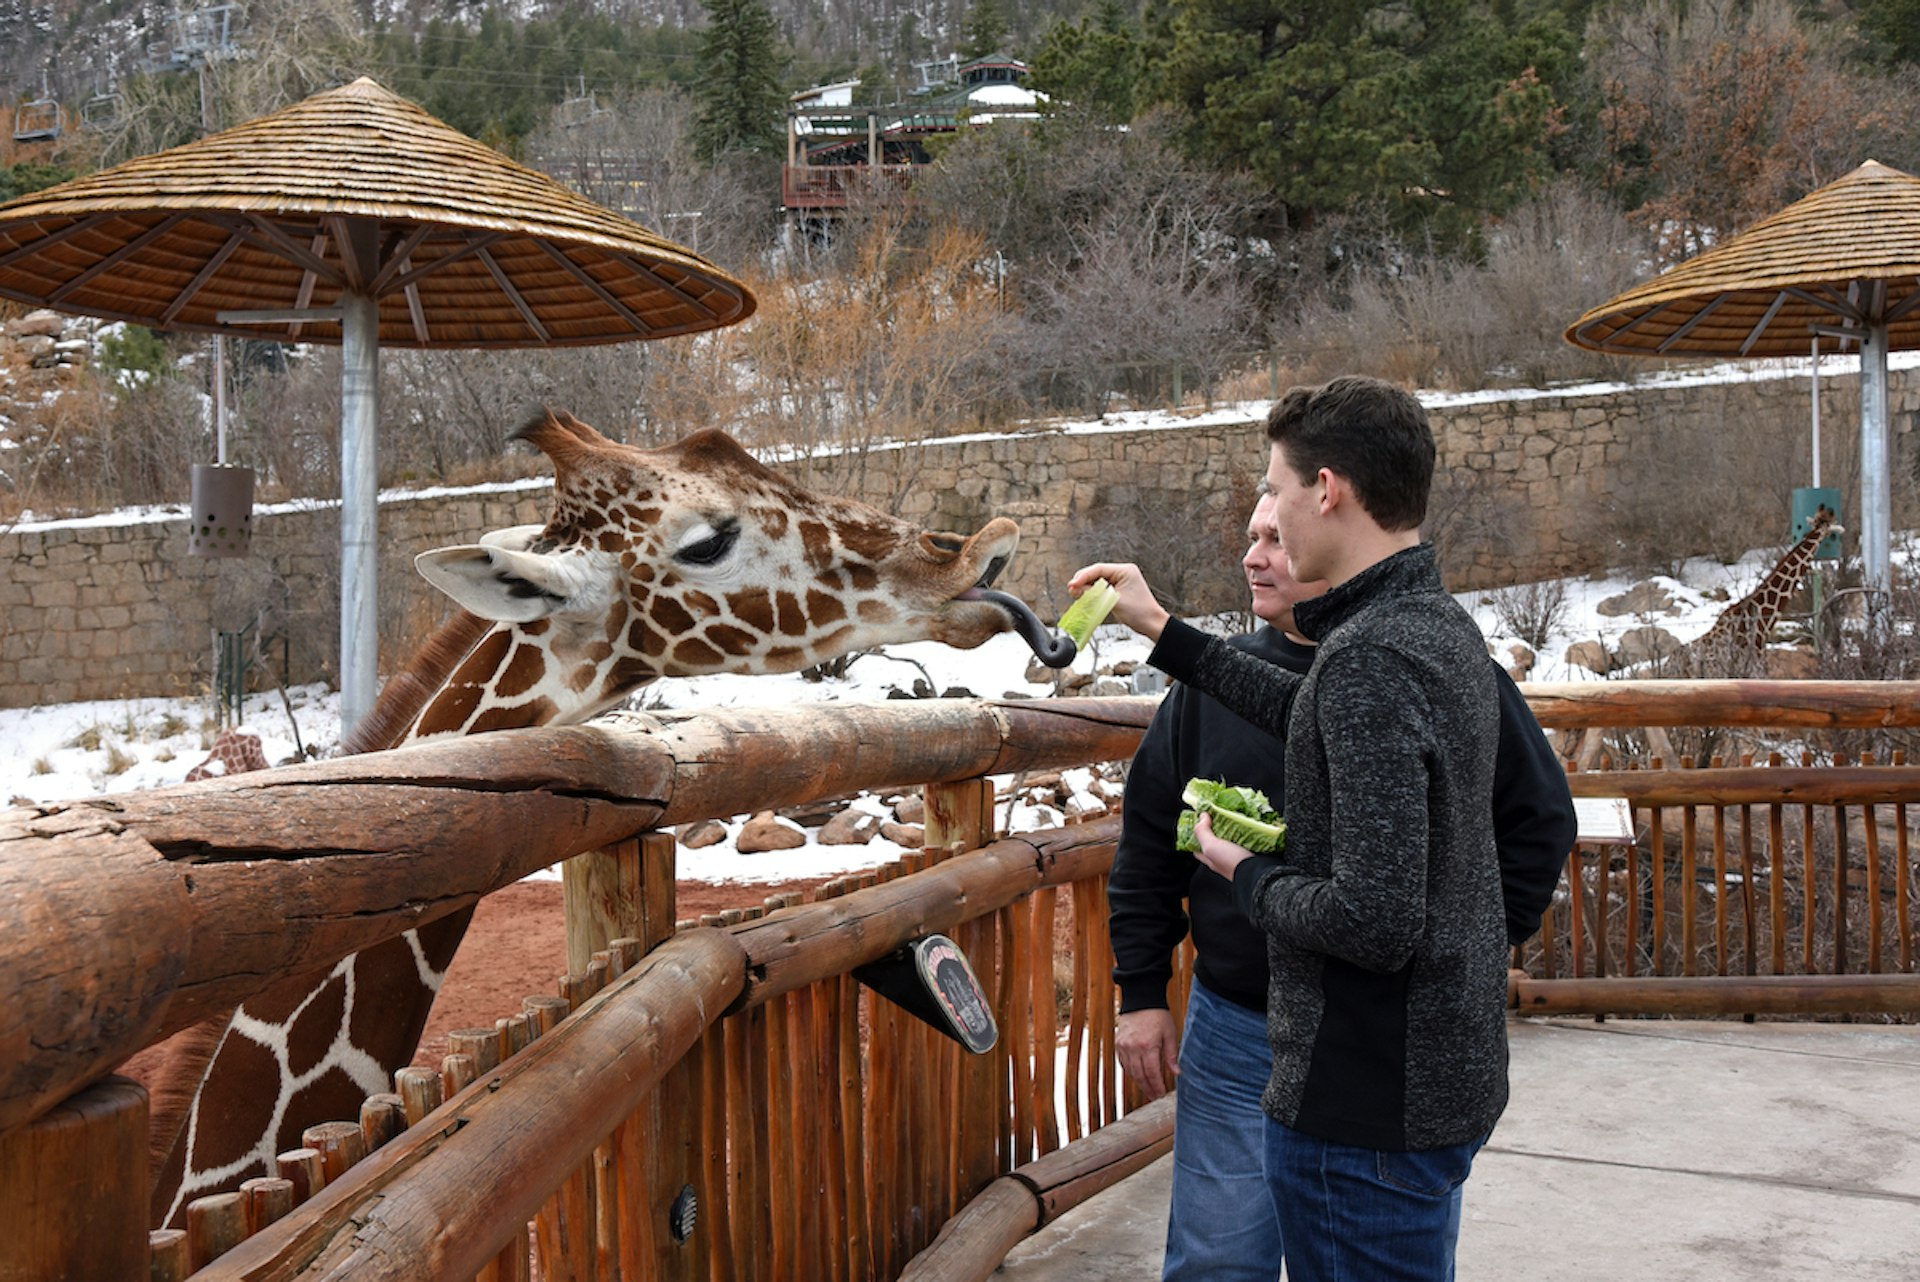 Two men feed lettuce to a giraffe in winter at Cheyenne Mountain Zoo, Colorado Springs, Colorado, USA